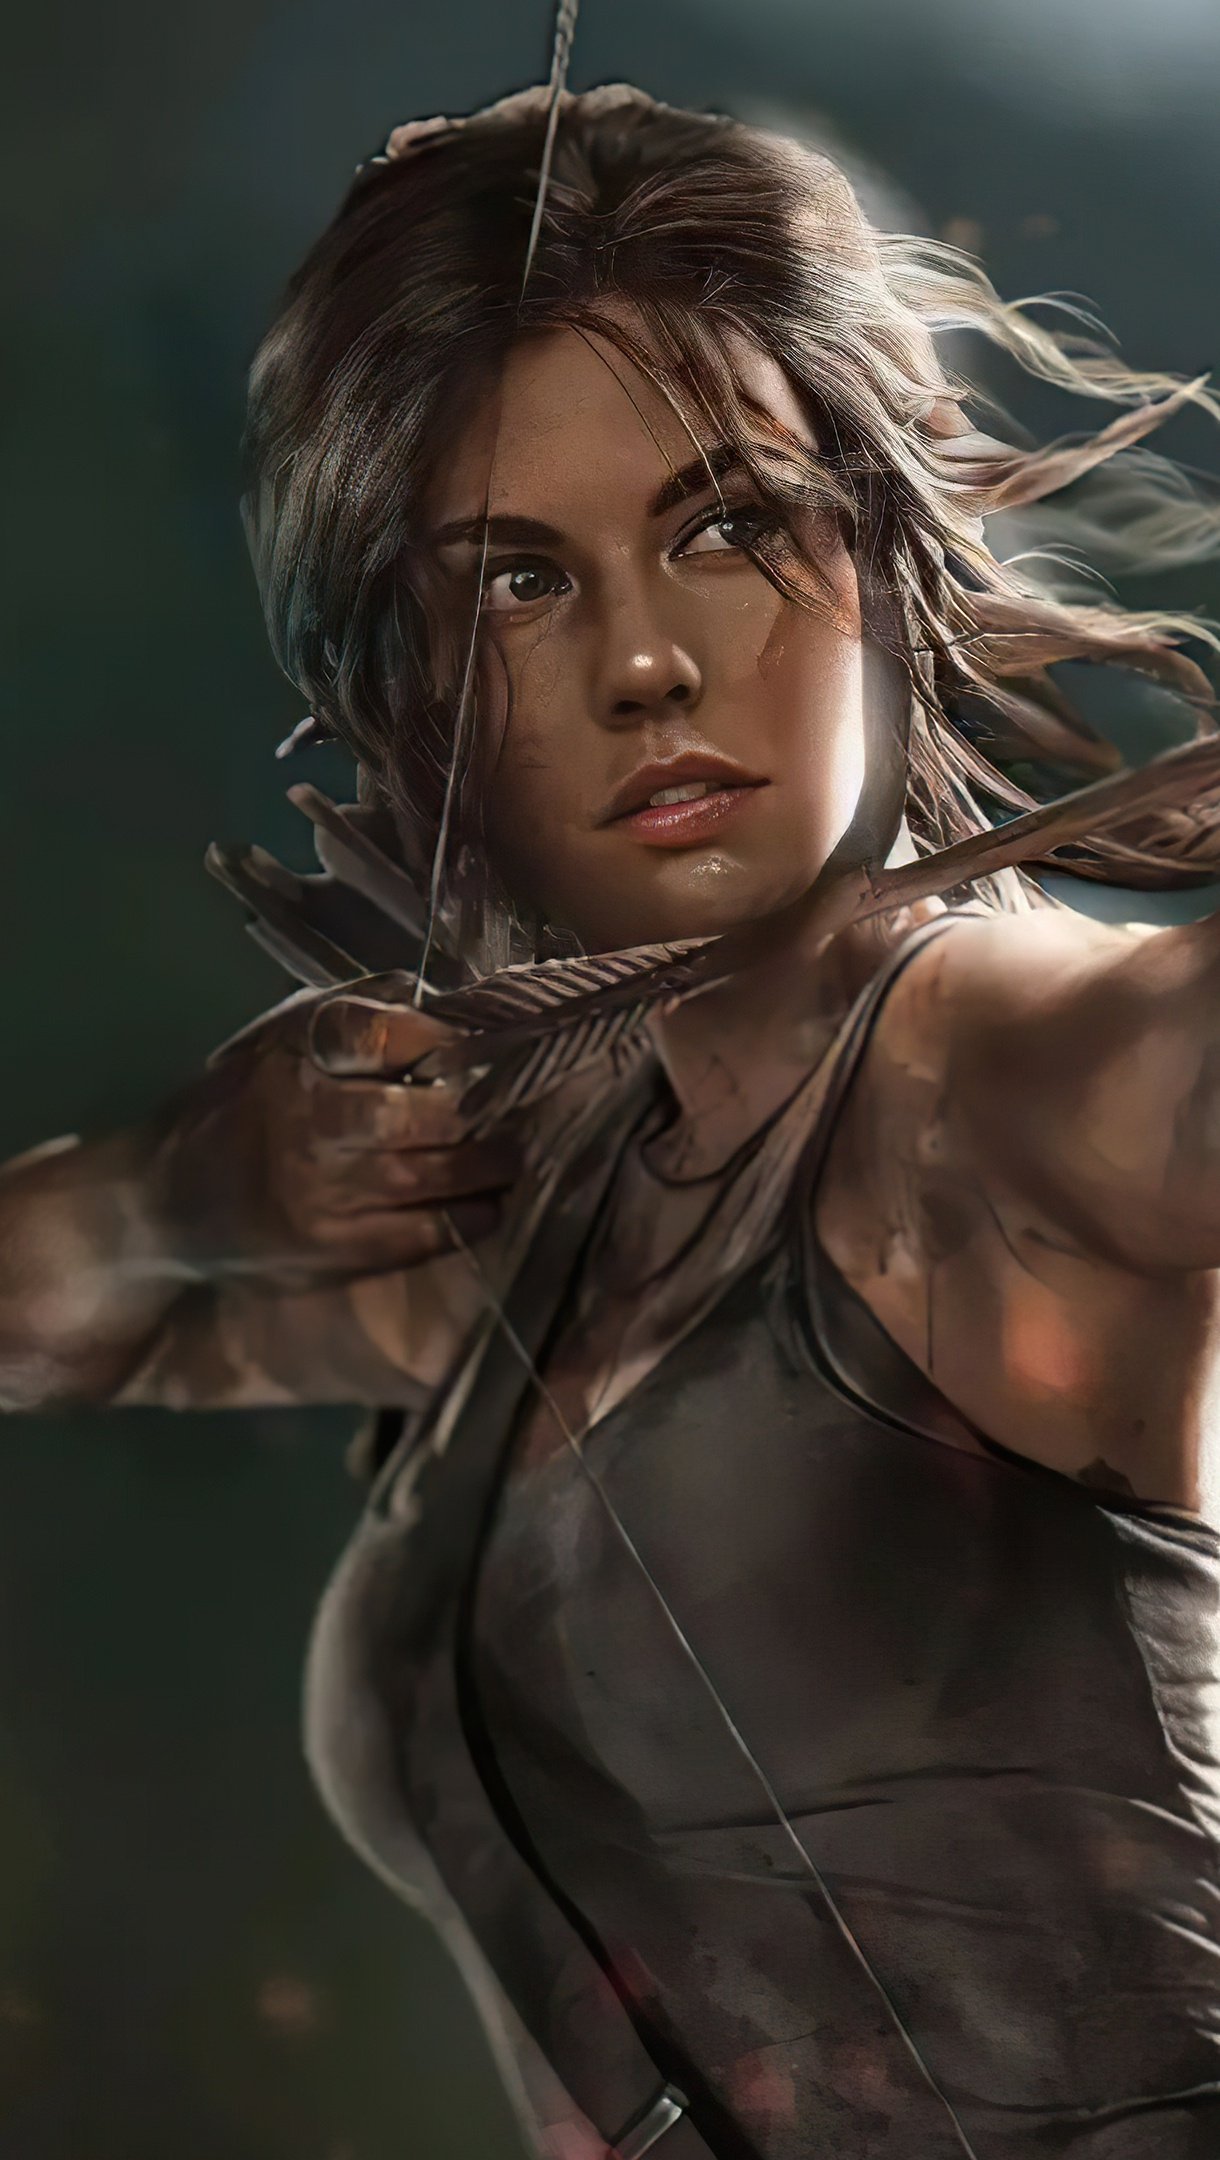 Lauren Cohan as Lara Croft The Tomb Raider Wallpaper 4k Ultra HD ID:11389